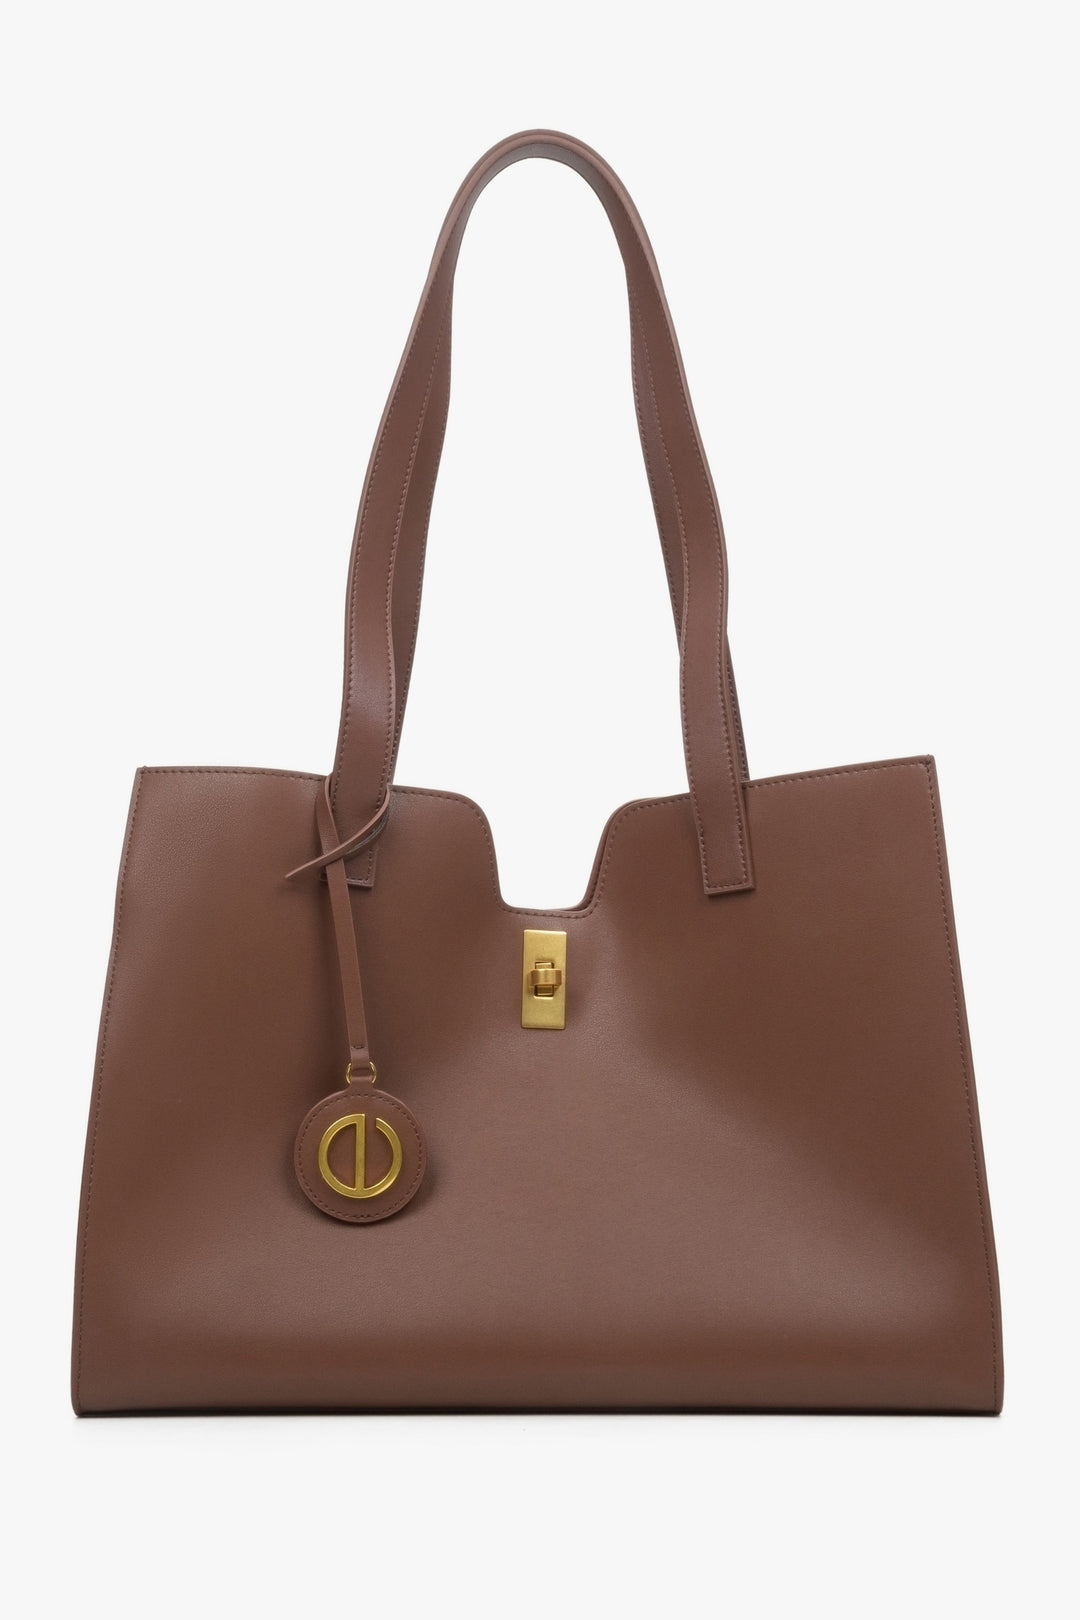 Women's dark brown leather shopper bag with decorative strap by Estro.